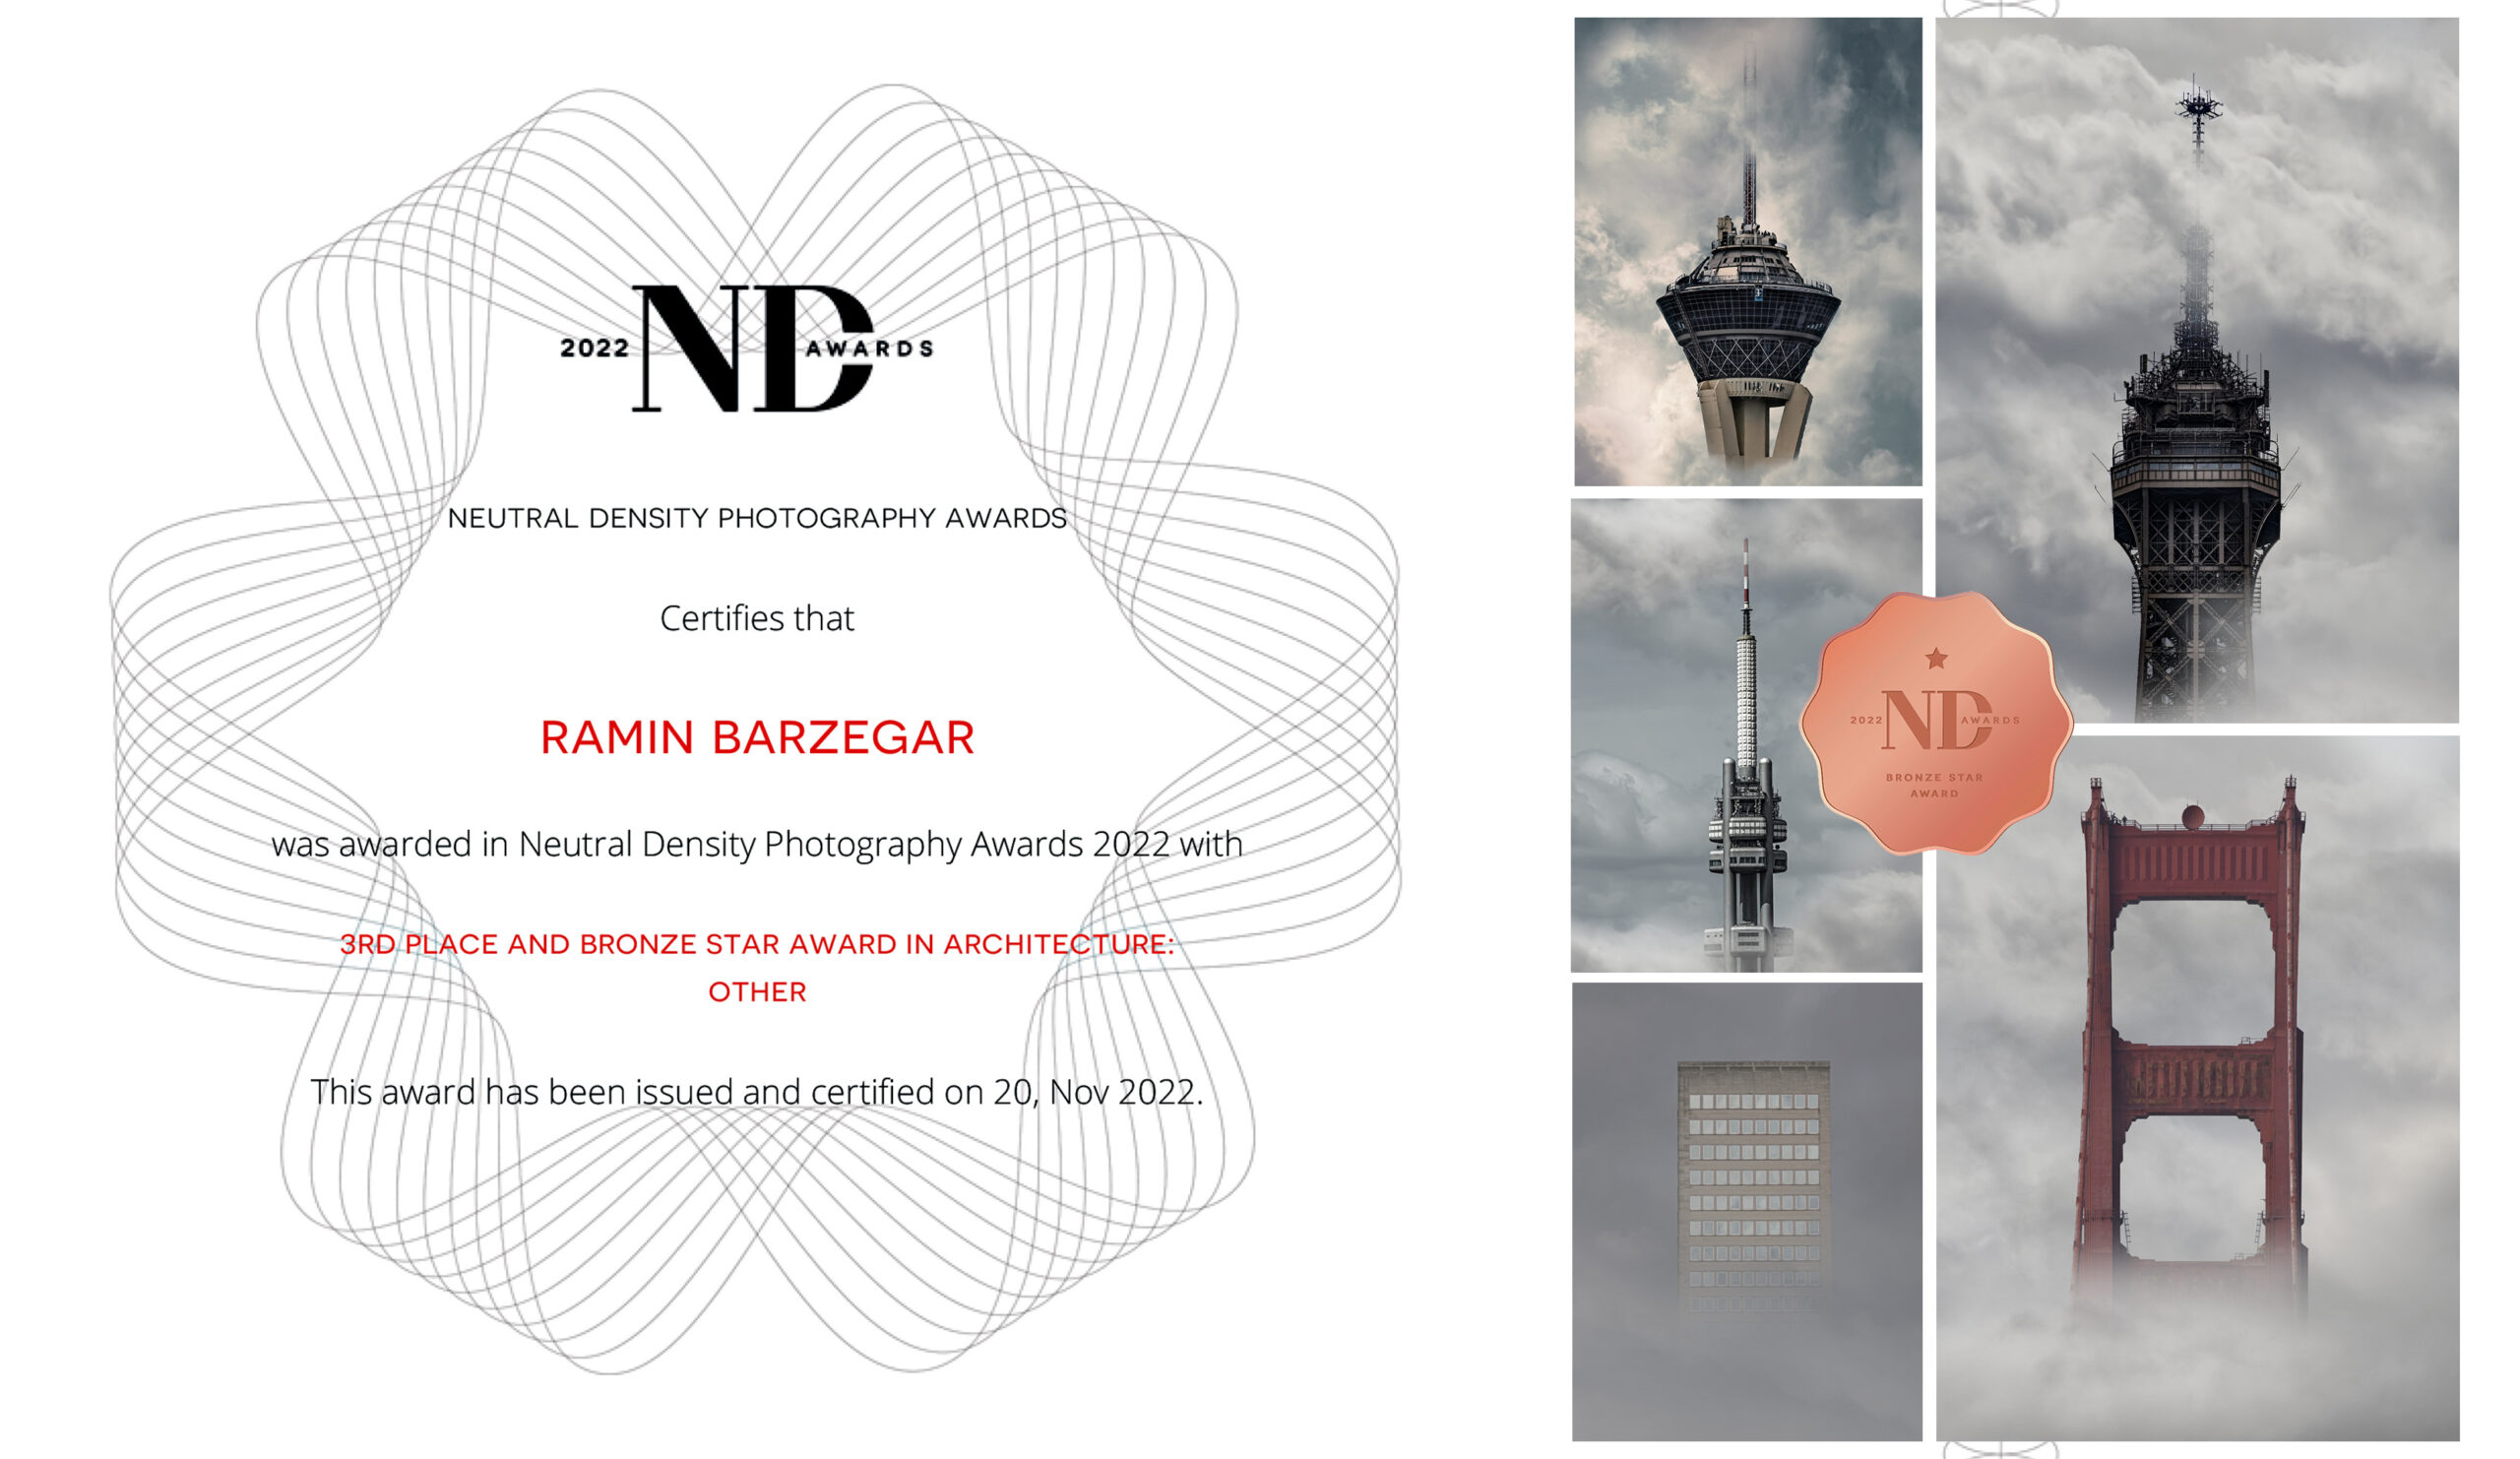 2022 ND AWARDS / مقام سوم و جایزه ستاره برنز معماری - رامین برزگر